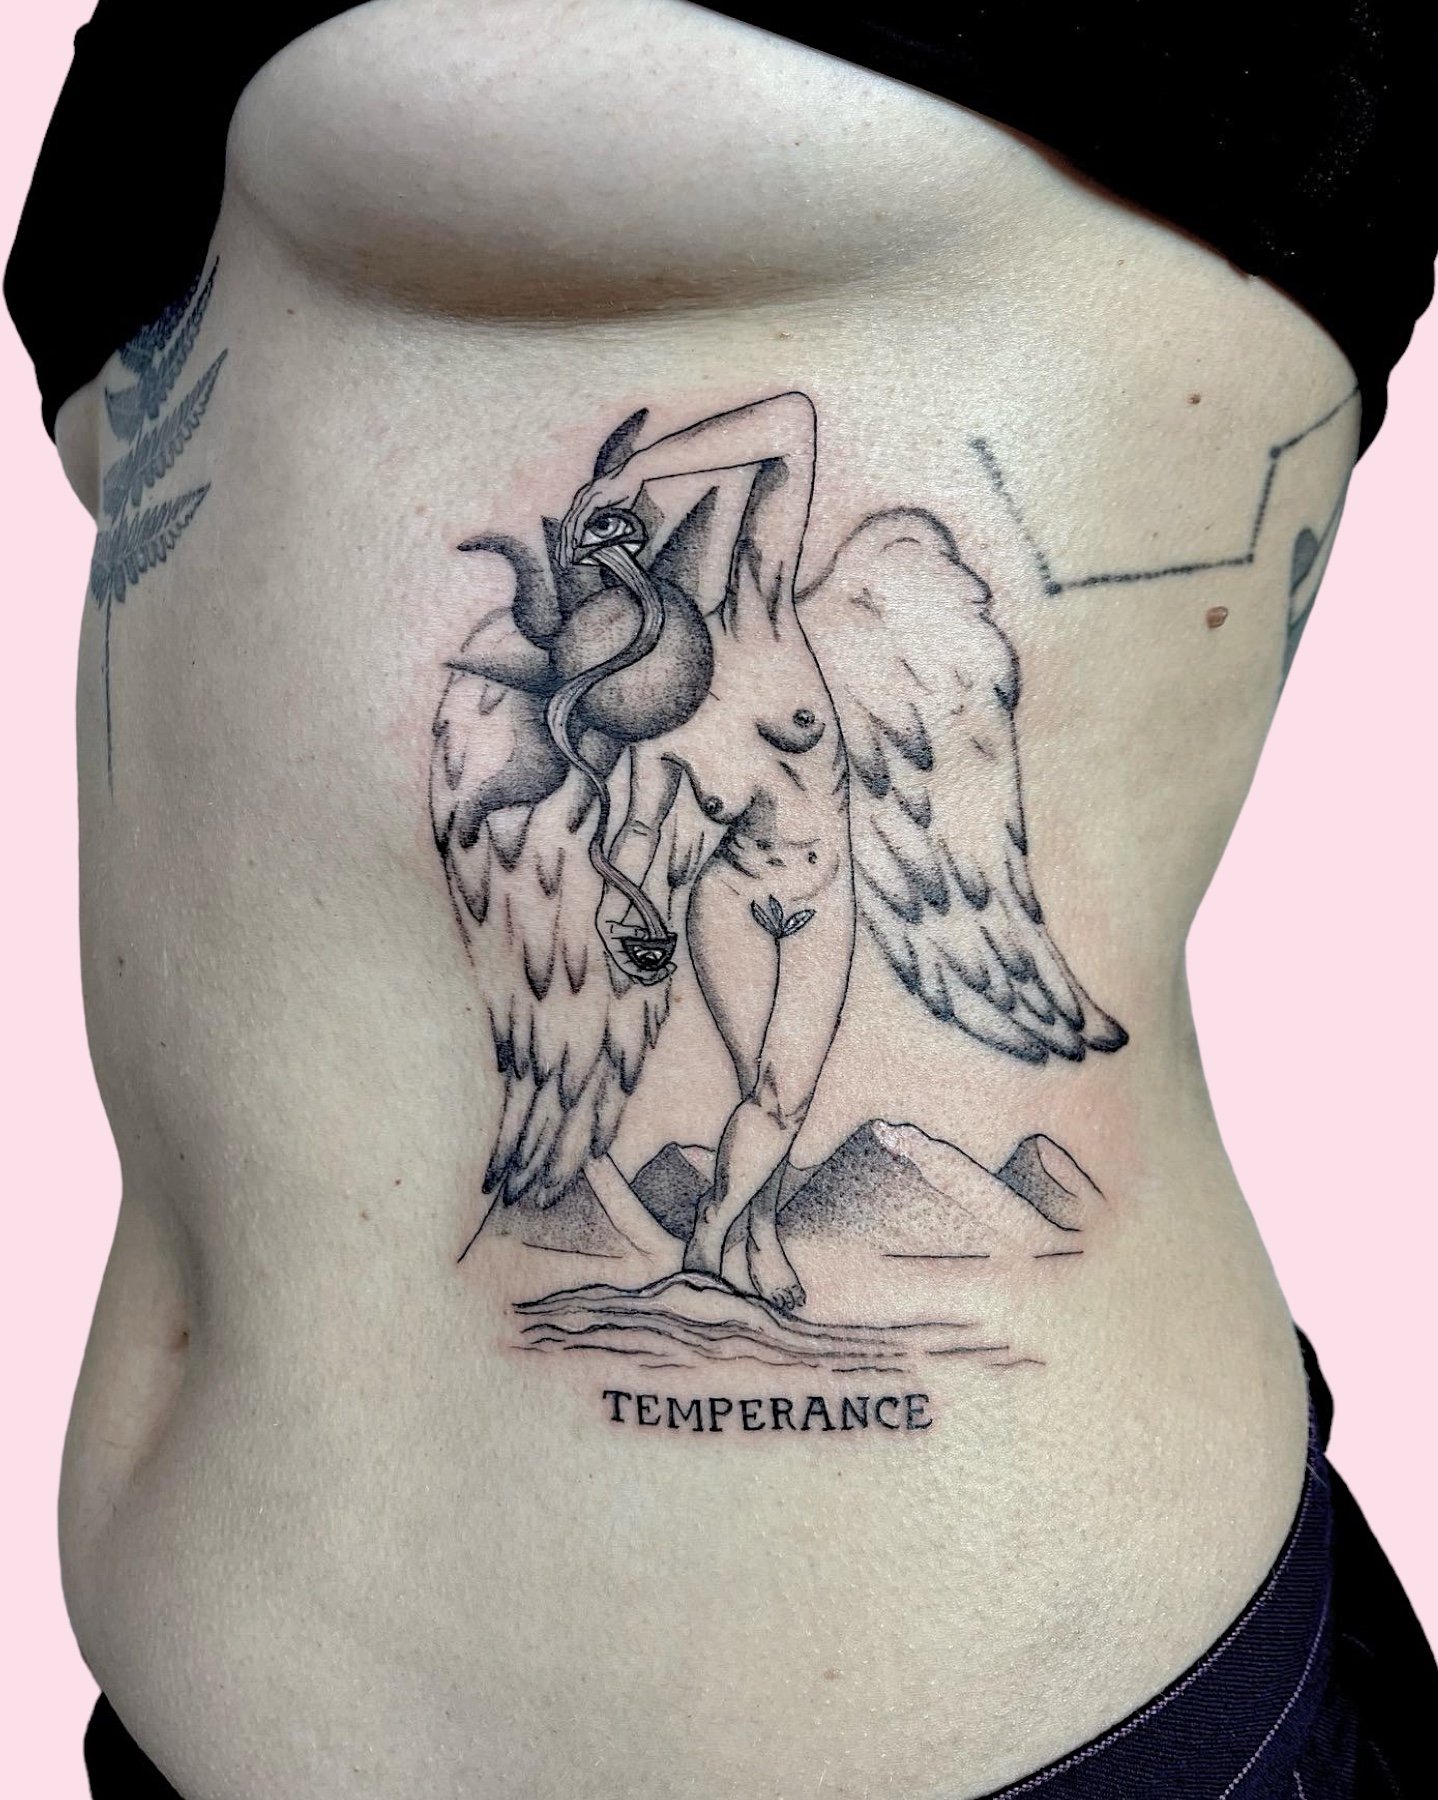 Temperance tattoo by Donna Aviles.JPG